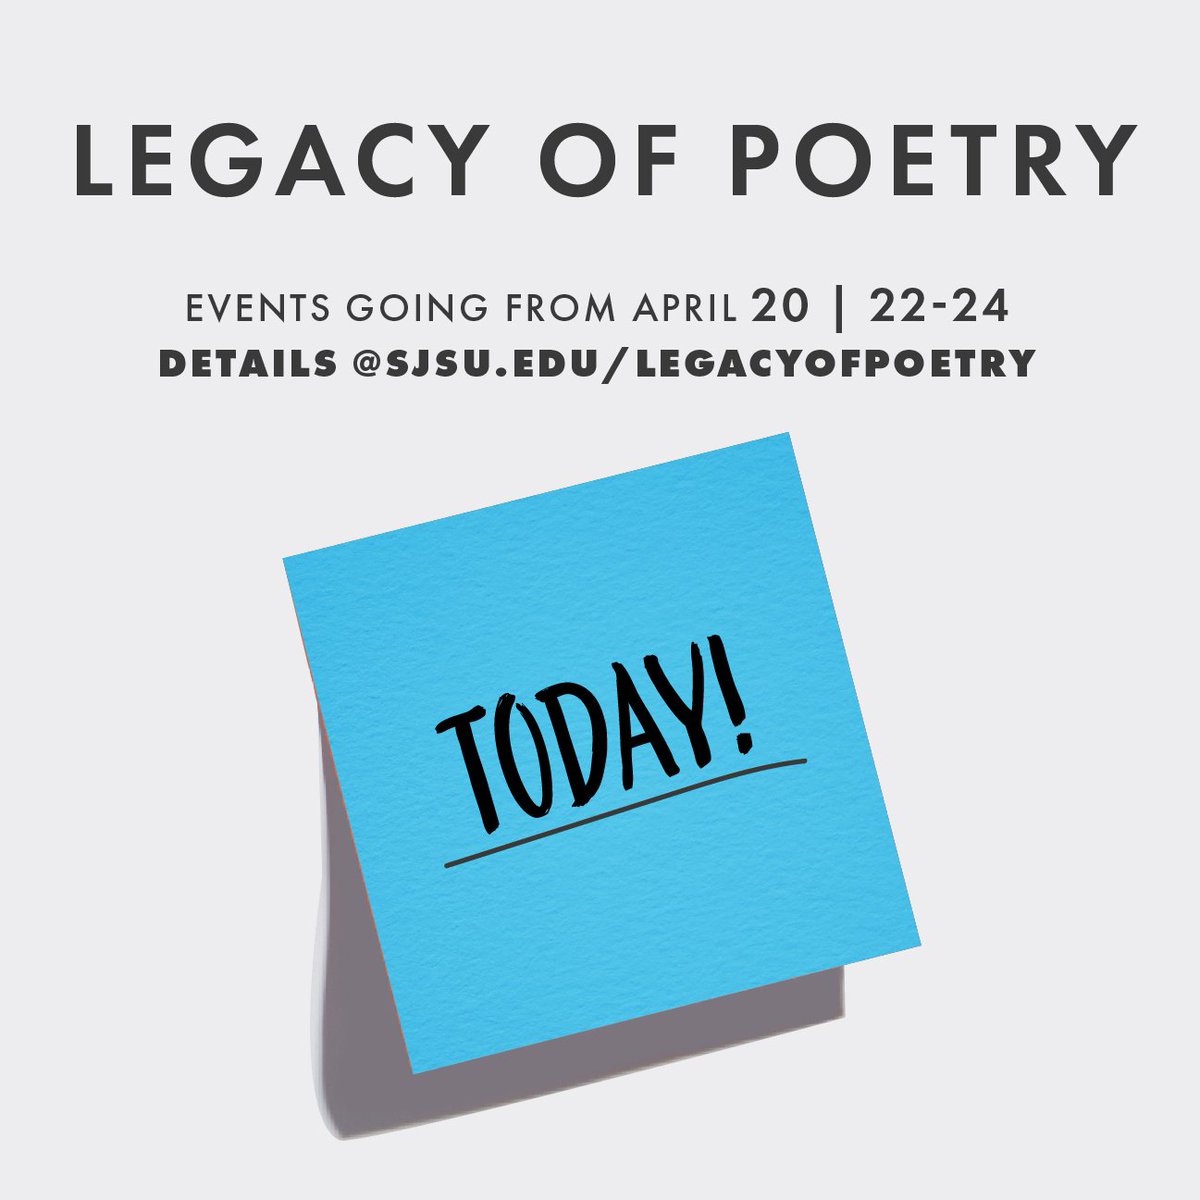 ITS HERE! 
Legacy of poetry begins @NirvanaSoulSJ at 7PM 

For additional details visit sjsu.edu/legacyofpoetry

#LOP22
#SJSULegacyofPoetry
#SanJose